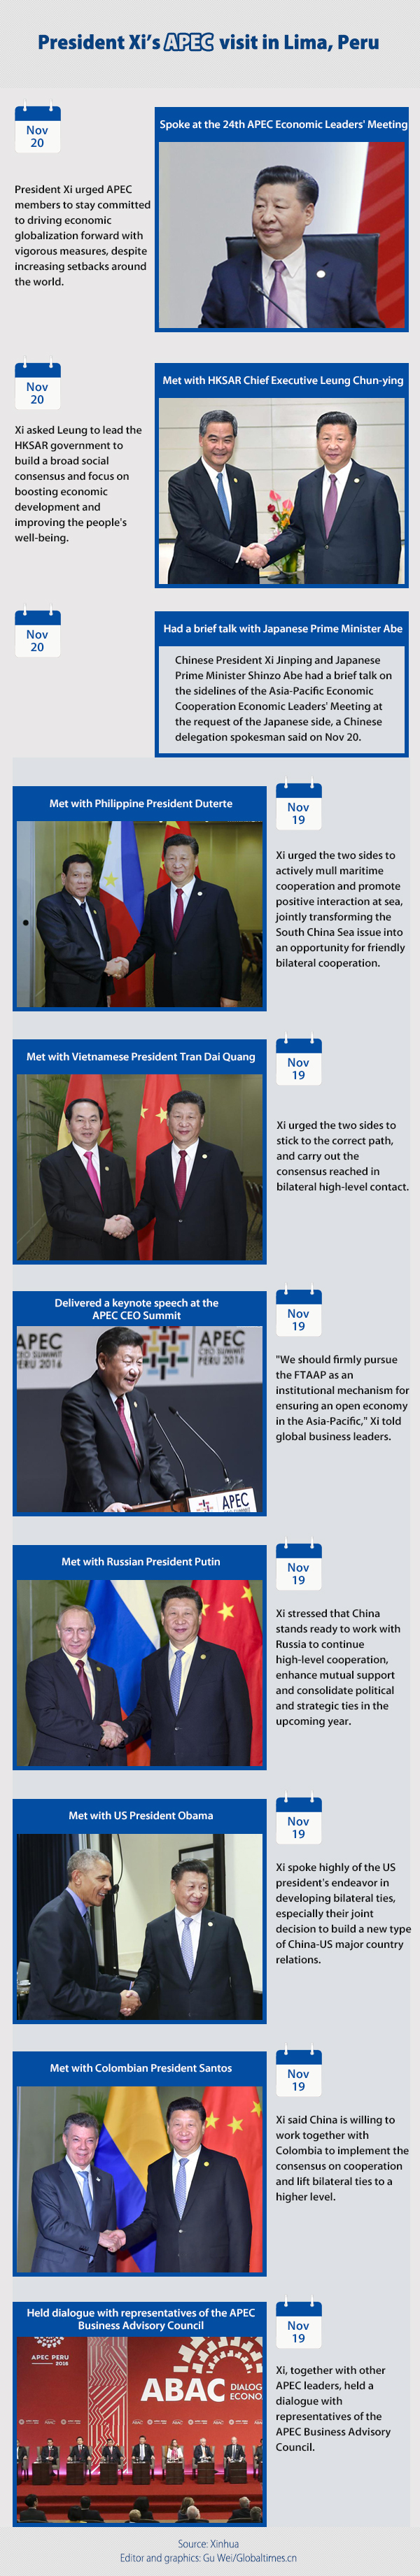 President Xi’s APEC visit to Lima, Peru Graphic: Globaltimes.cn